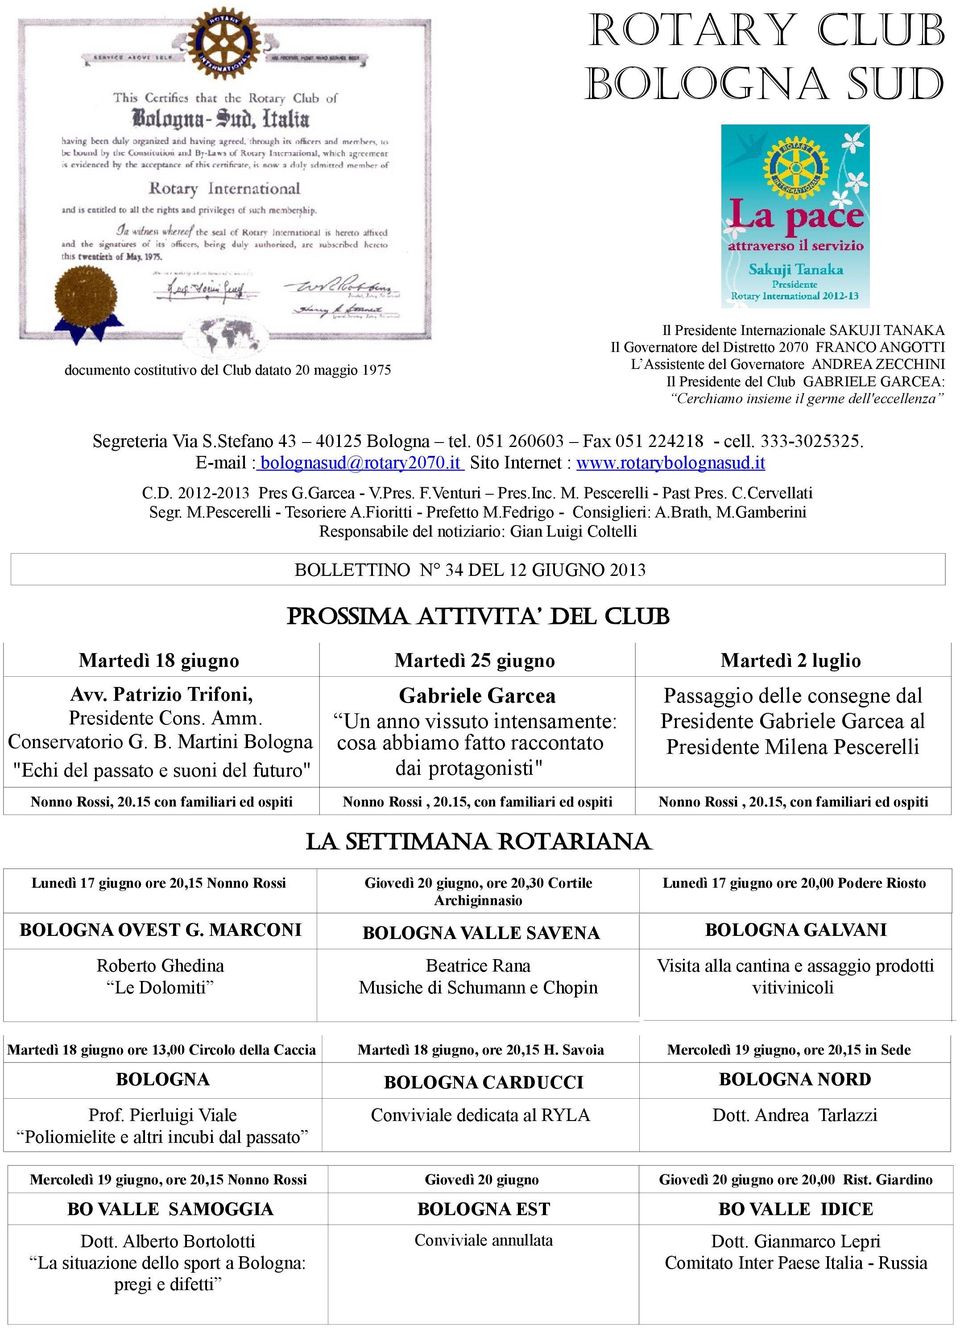 E-mail : bolognasud@rotary2070.it Sito Internet : www.rotarybolognasud.it C.D. 2012-2013 Pres G.Garcea - V.Pres. F.Venturi Pres.Inc. M. Pescerelli - Past Pres. C.Cervellati Segr. M.Pescerelli - Tesoriere A.